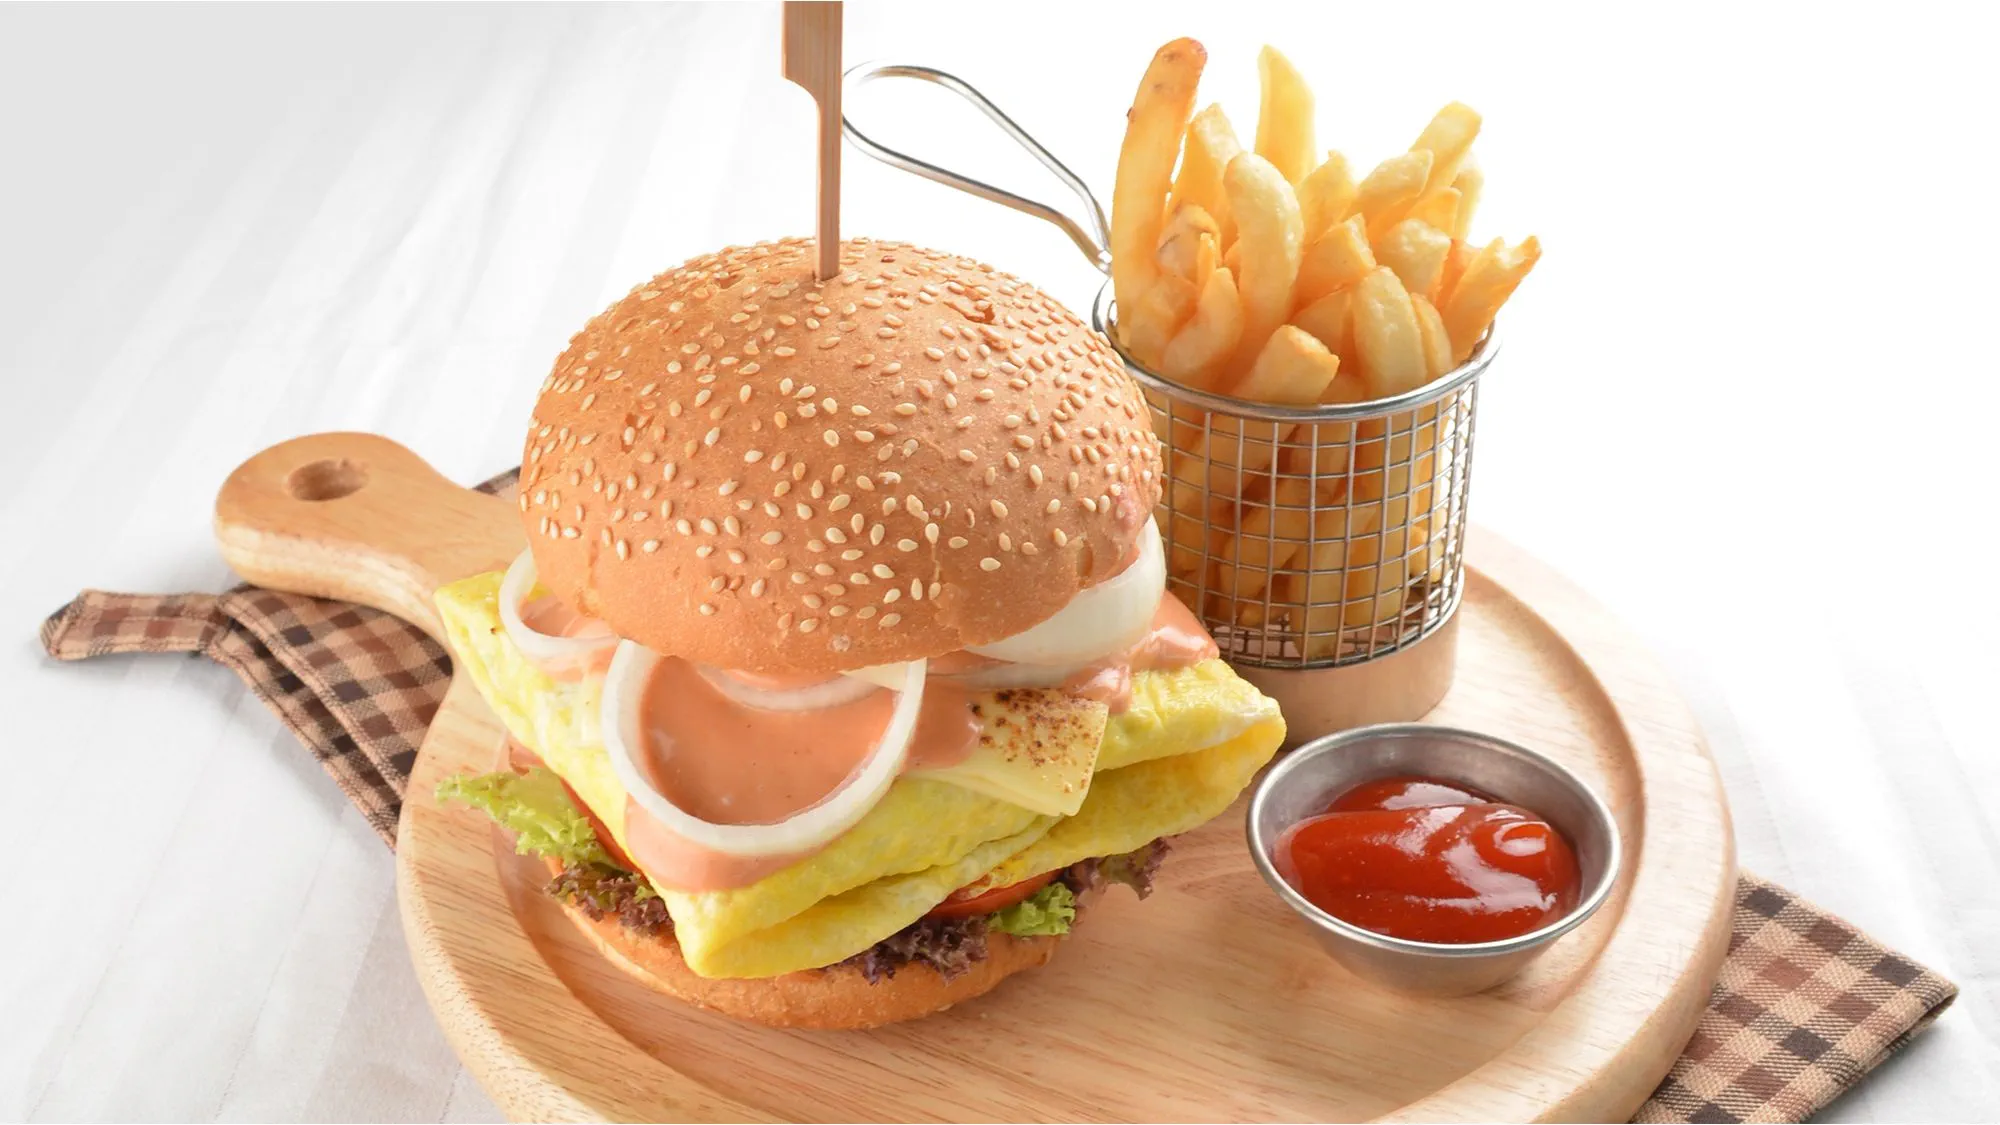 Montreal Spiced “Ramly” Burger